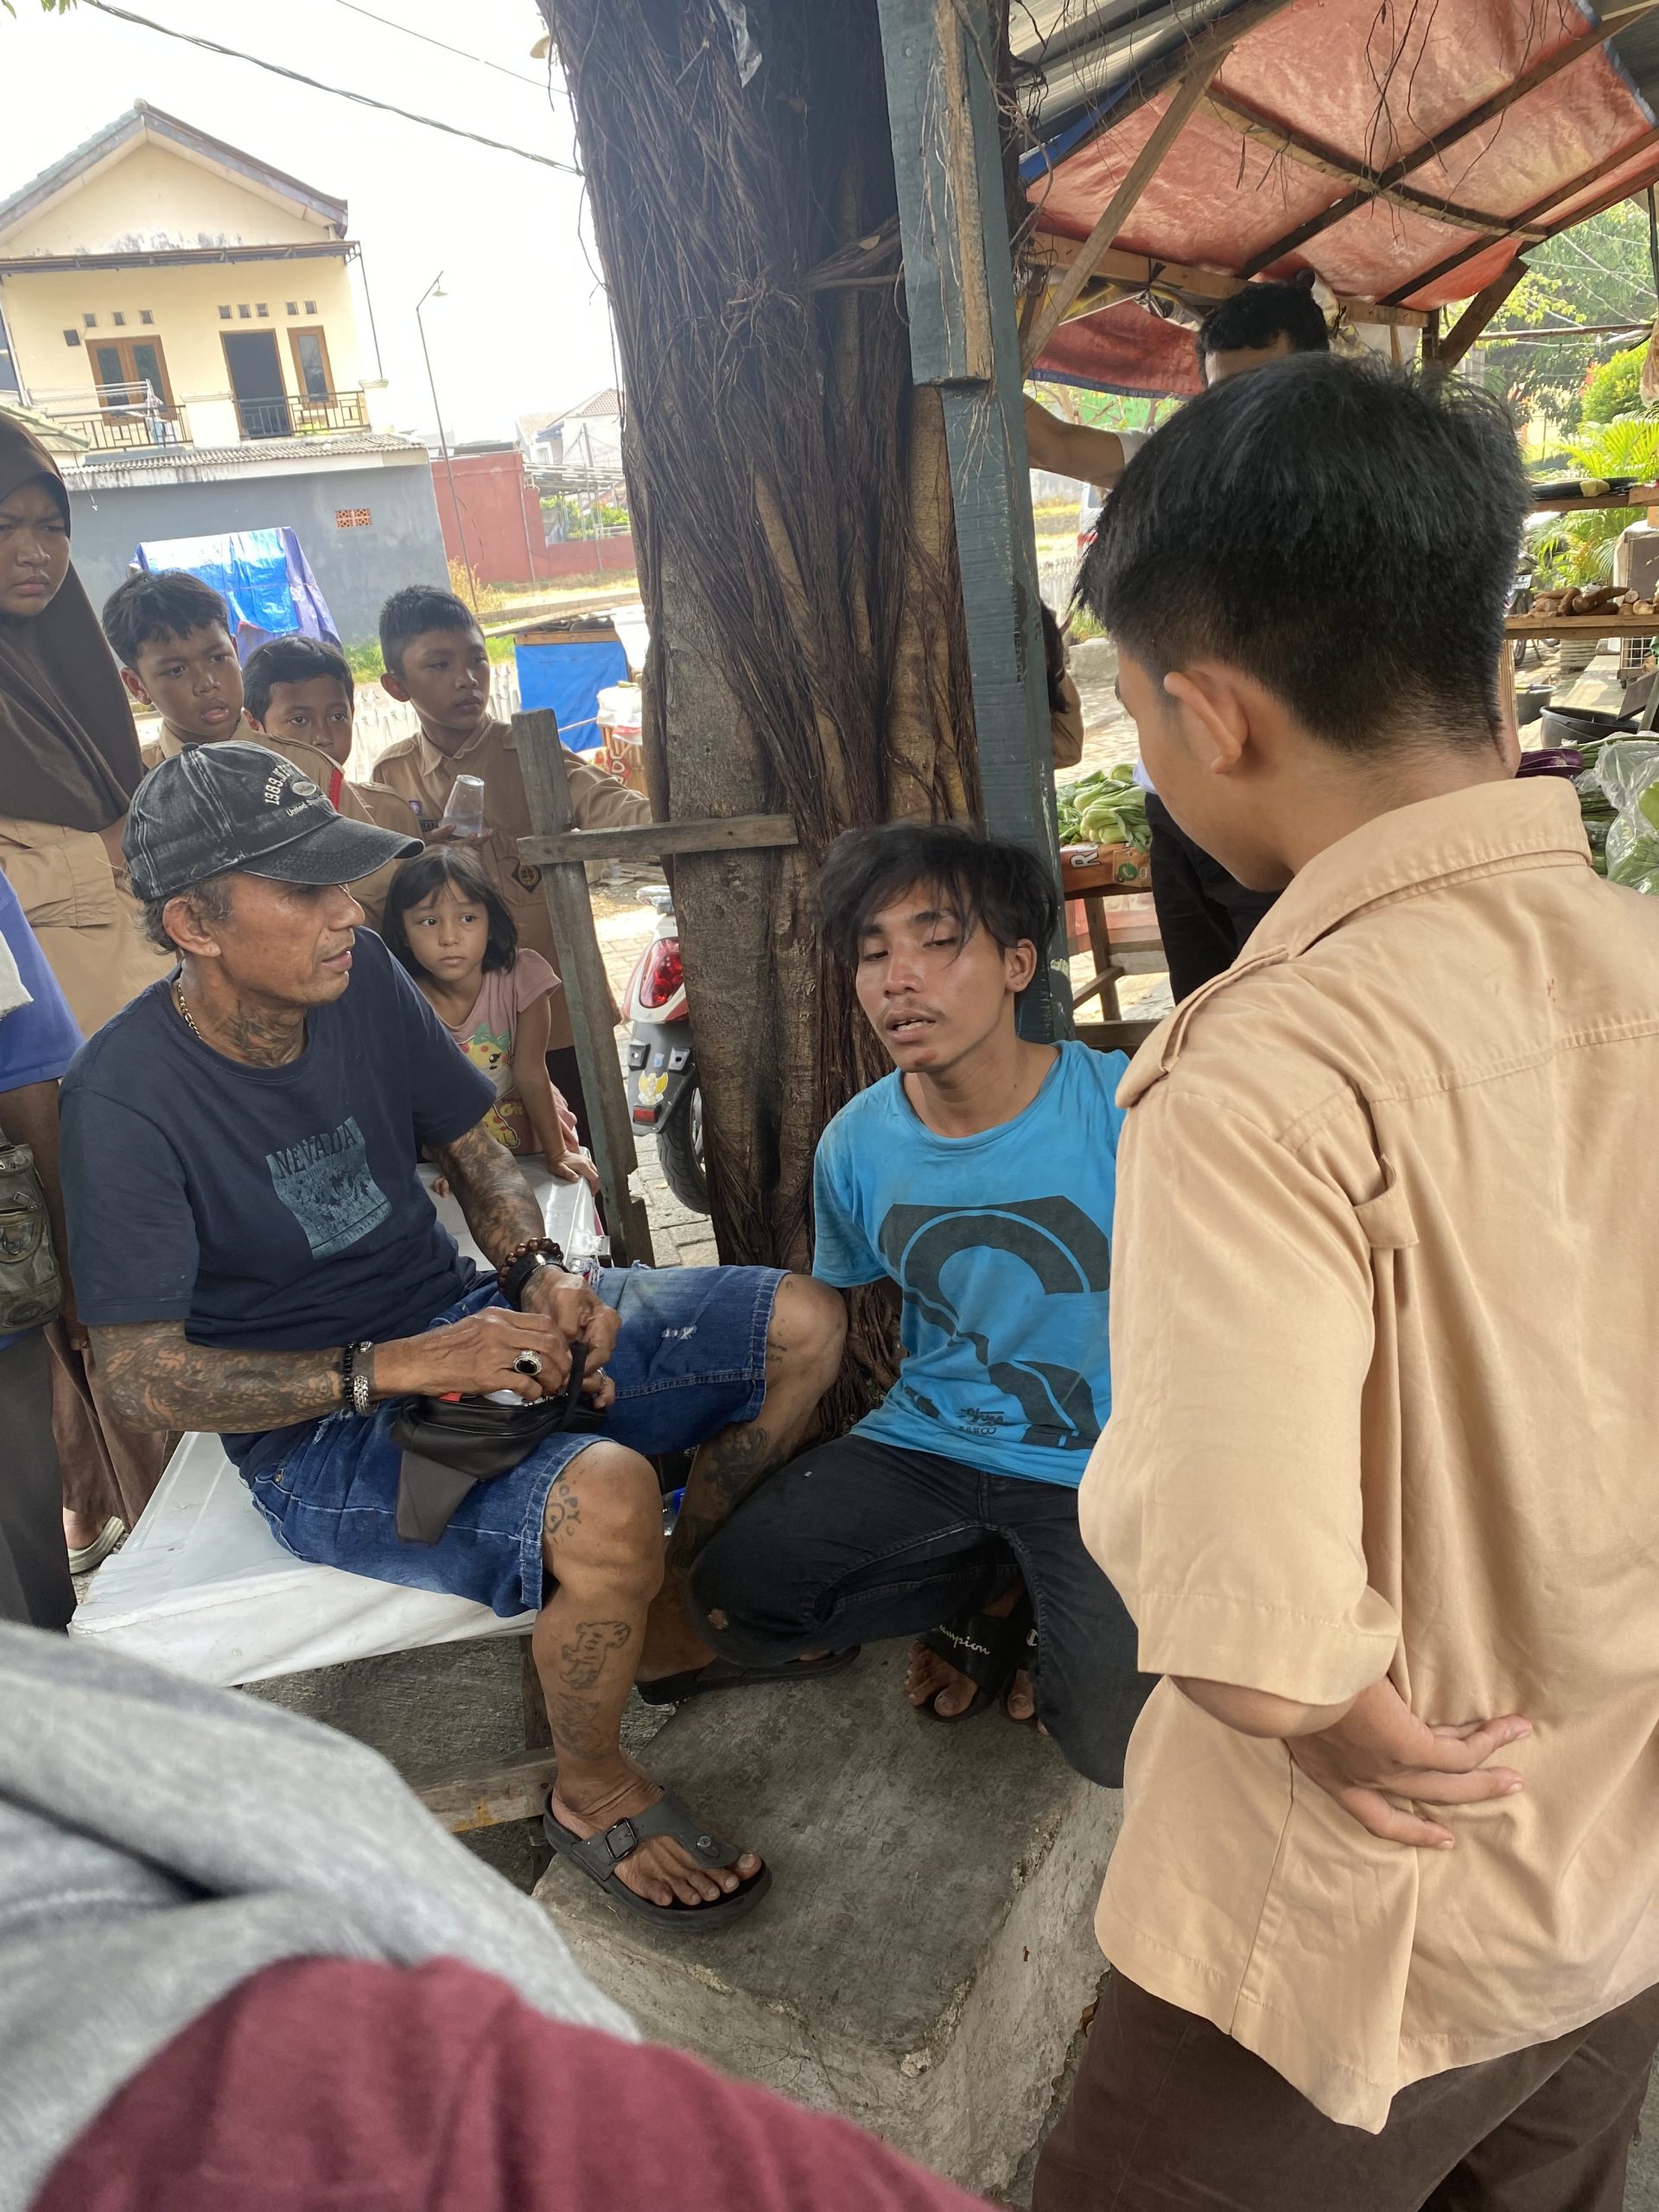 Pelaku curanmor ditangkap warga di Kompleks Kejaksaan, Kelurahan Kayuringin Jaya, Kecamatan Bekasi Selatan, Kota Bekasi. Foto: Gobekasi.id